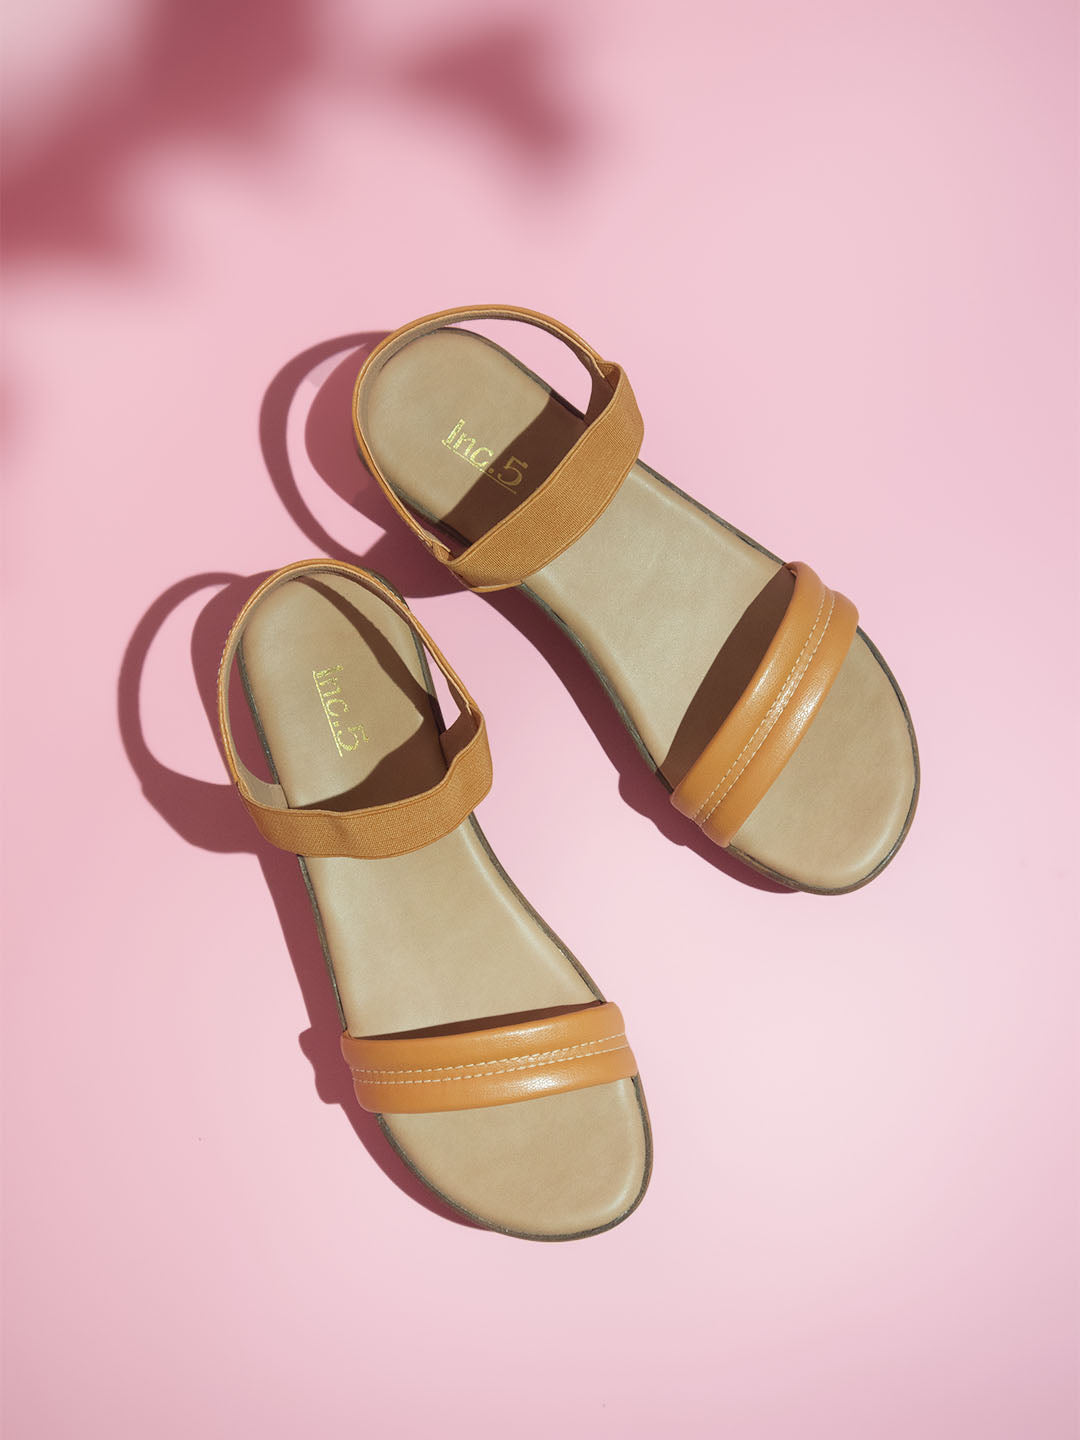 Buy Now,Inc.5 Gladiators Heels Fashion Sandal For Women – Inc5 Shoes